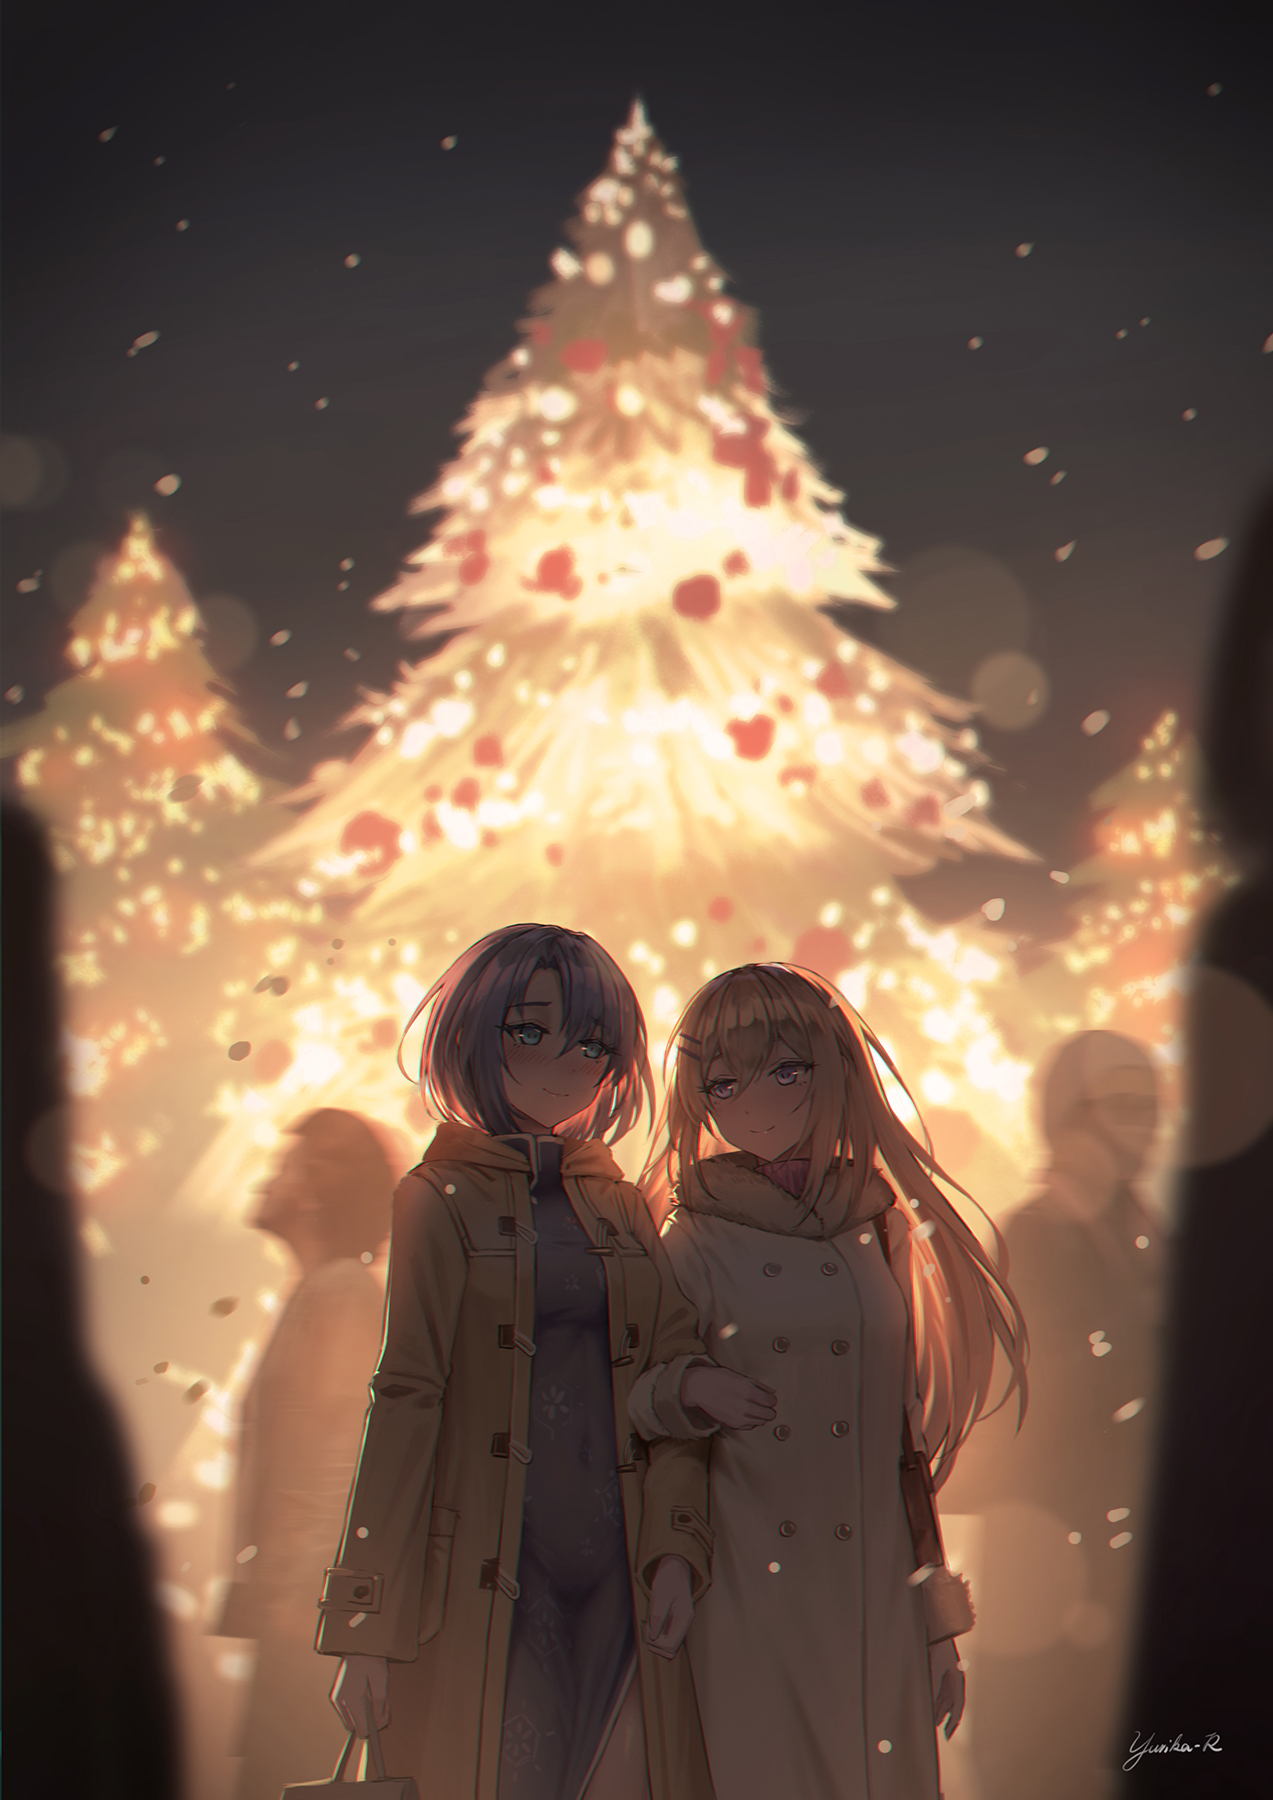 Anime 1273x1800 anime anime girls digital art artwork 2D portrait display yurichtofen Christmas Christmas tree yuri